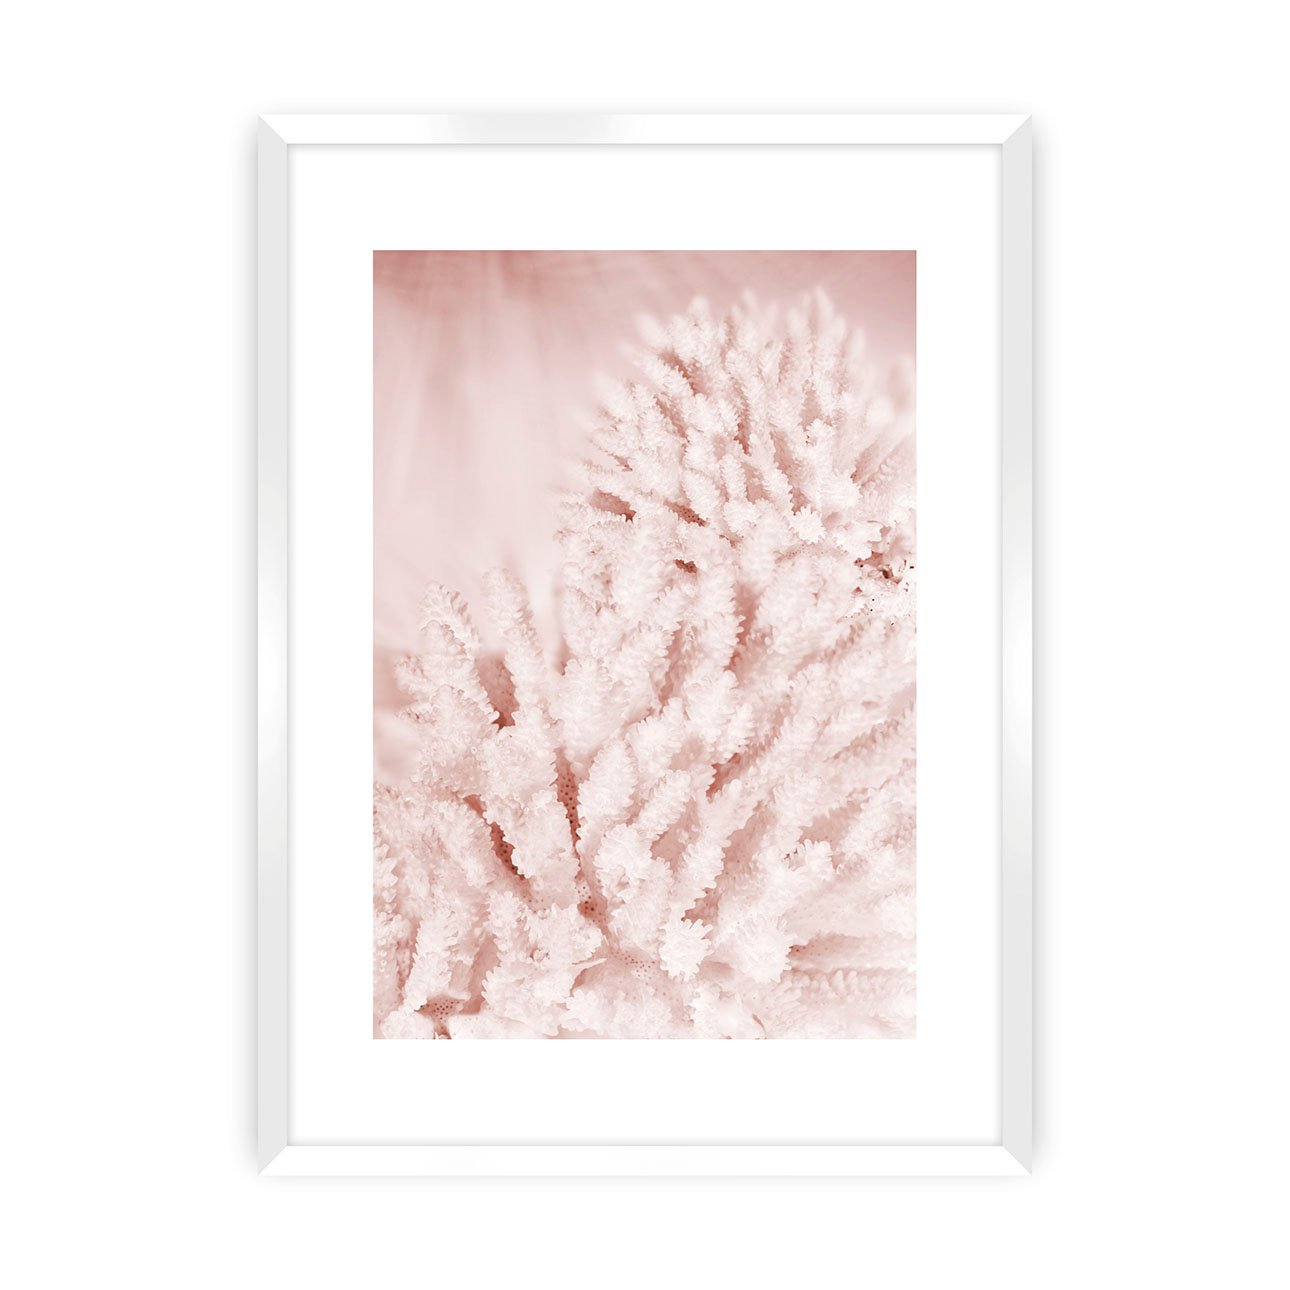 Dekoria Plakát Pastel Pink II, 30 x 40 cm, Zvolit rámek: Bílý